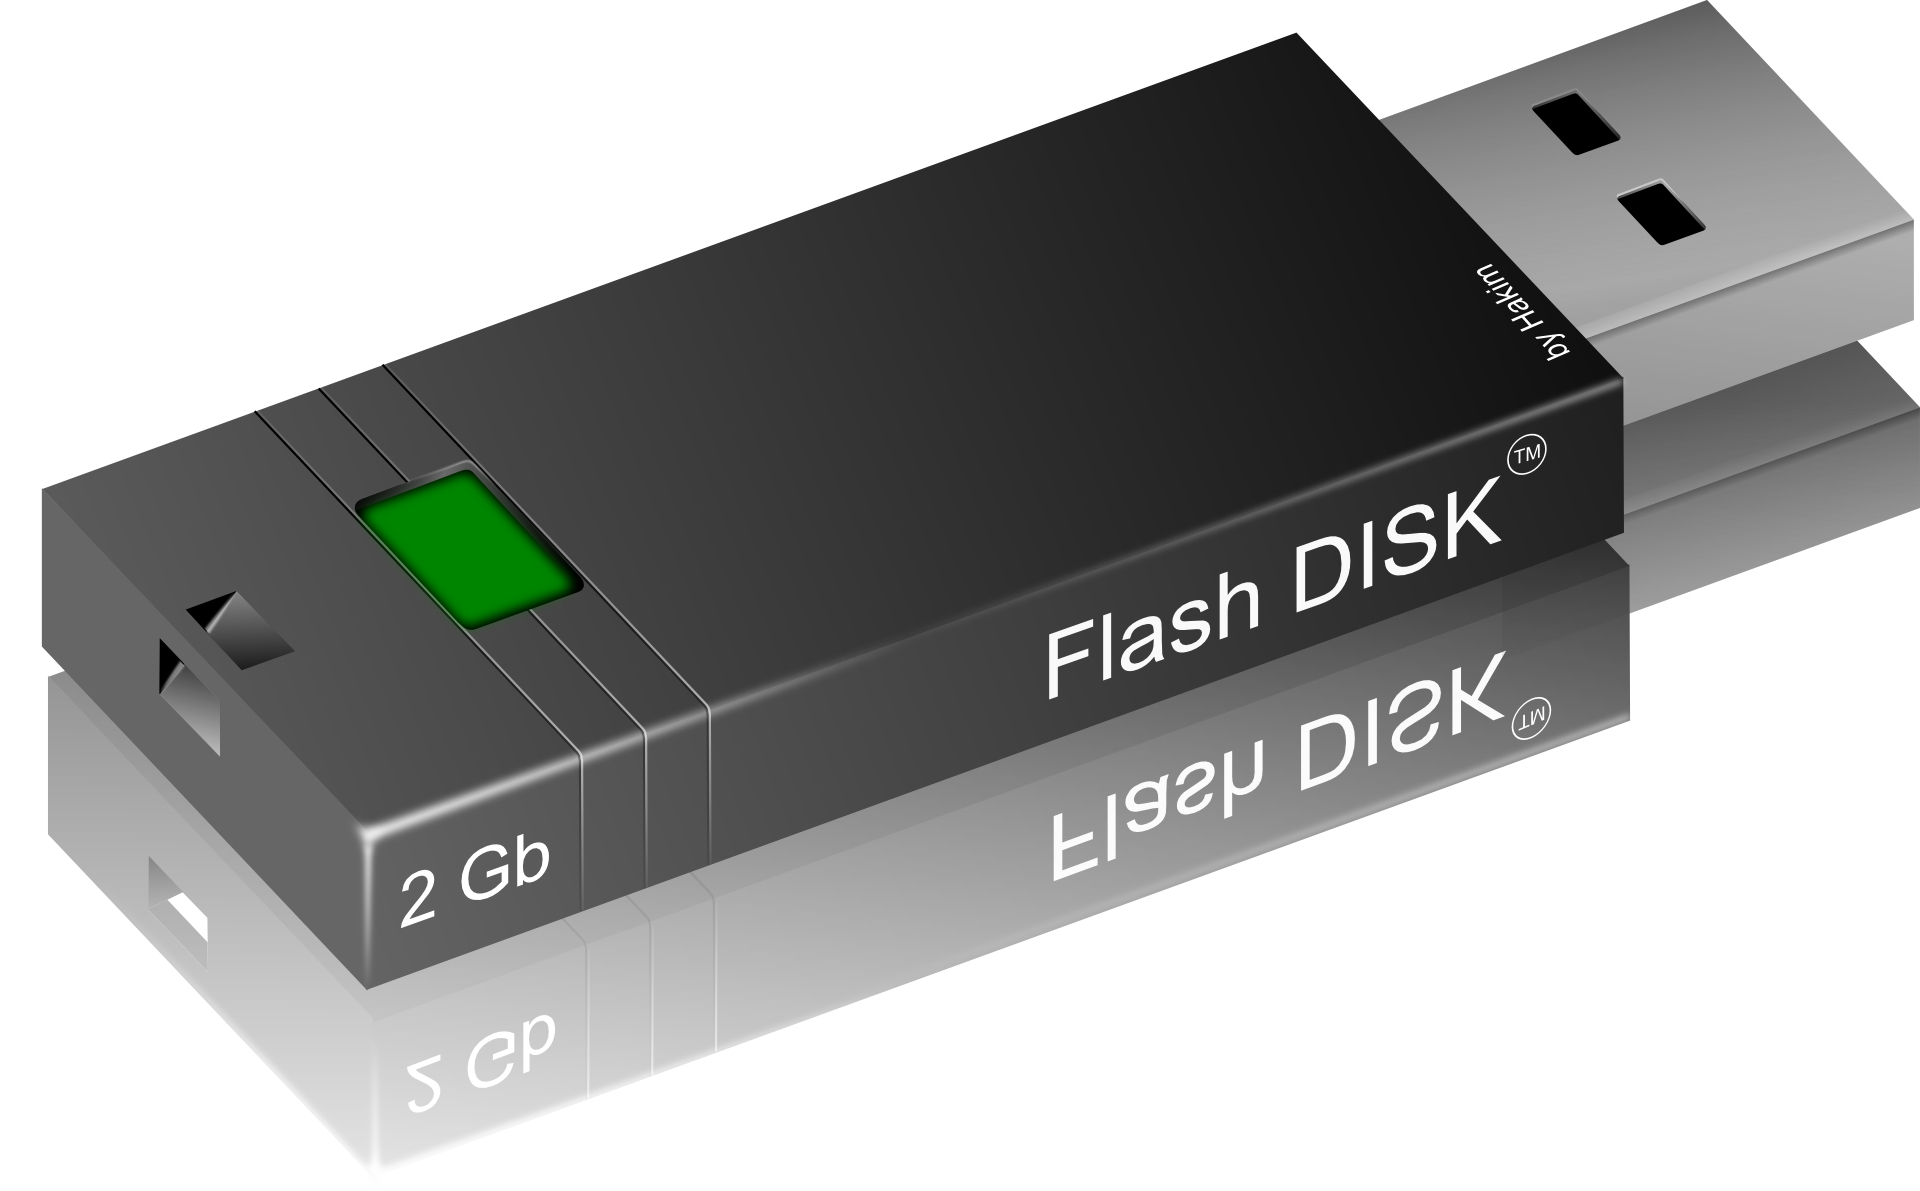 Black Flash disk,USB drives vector